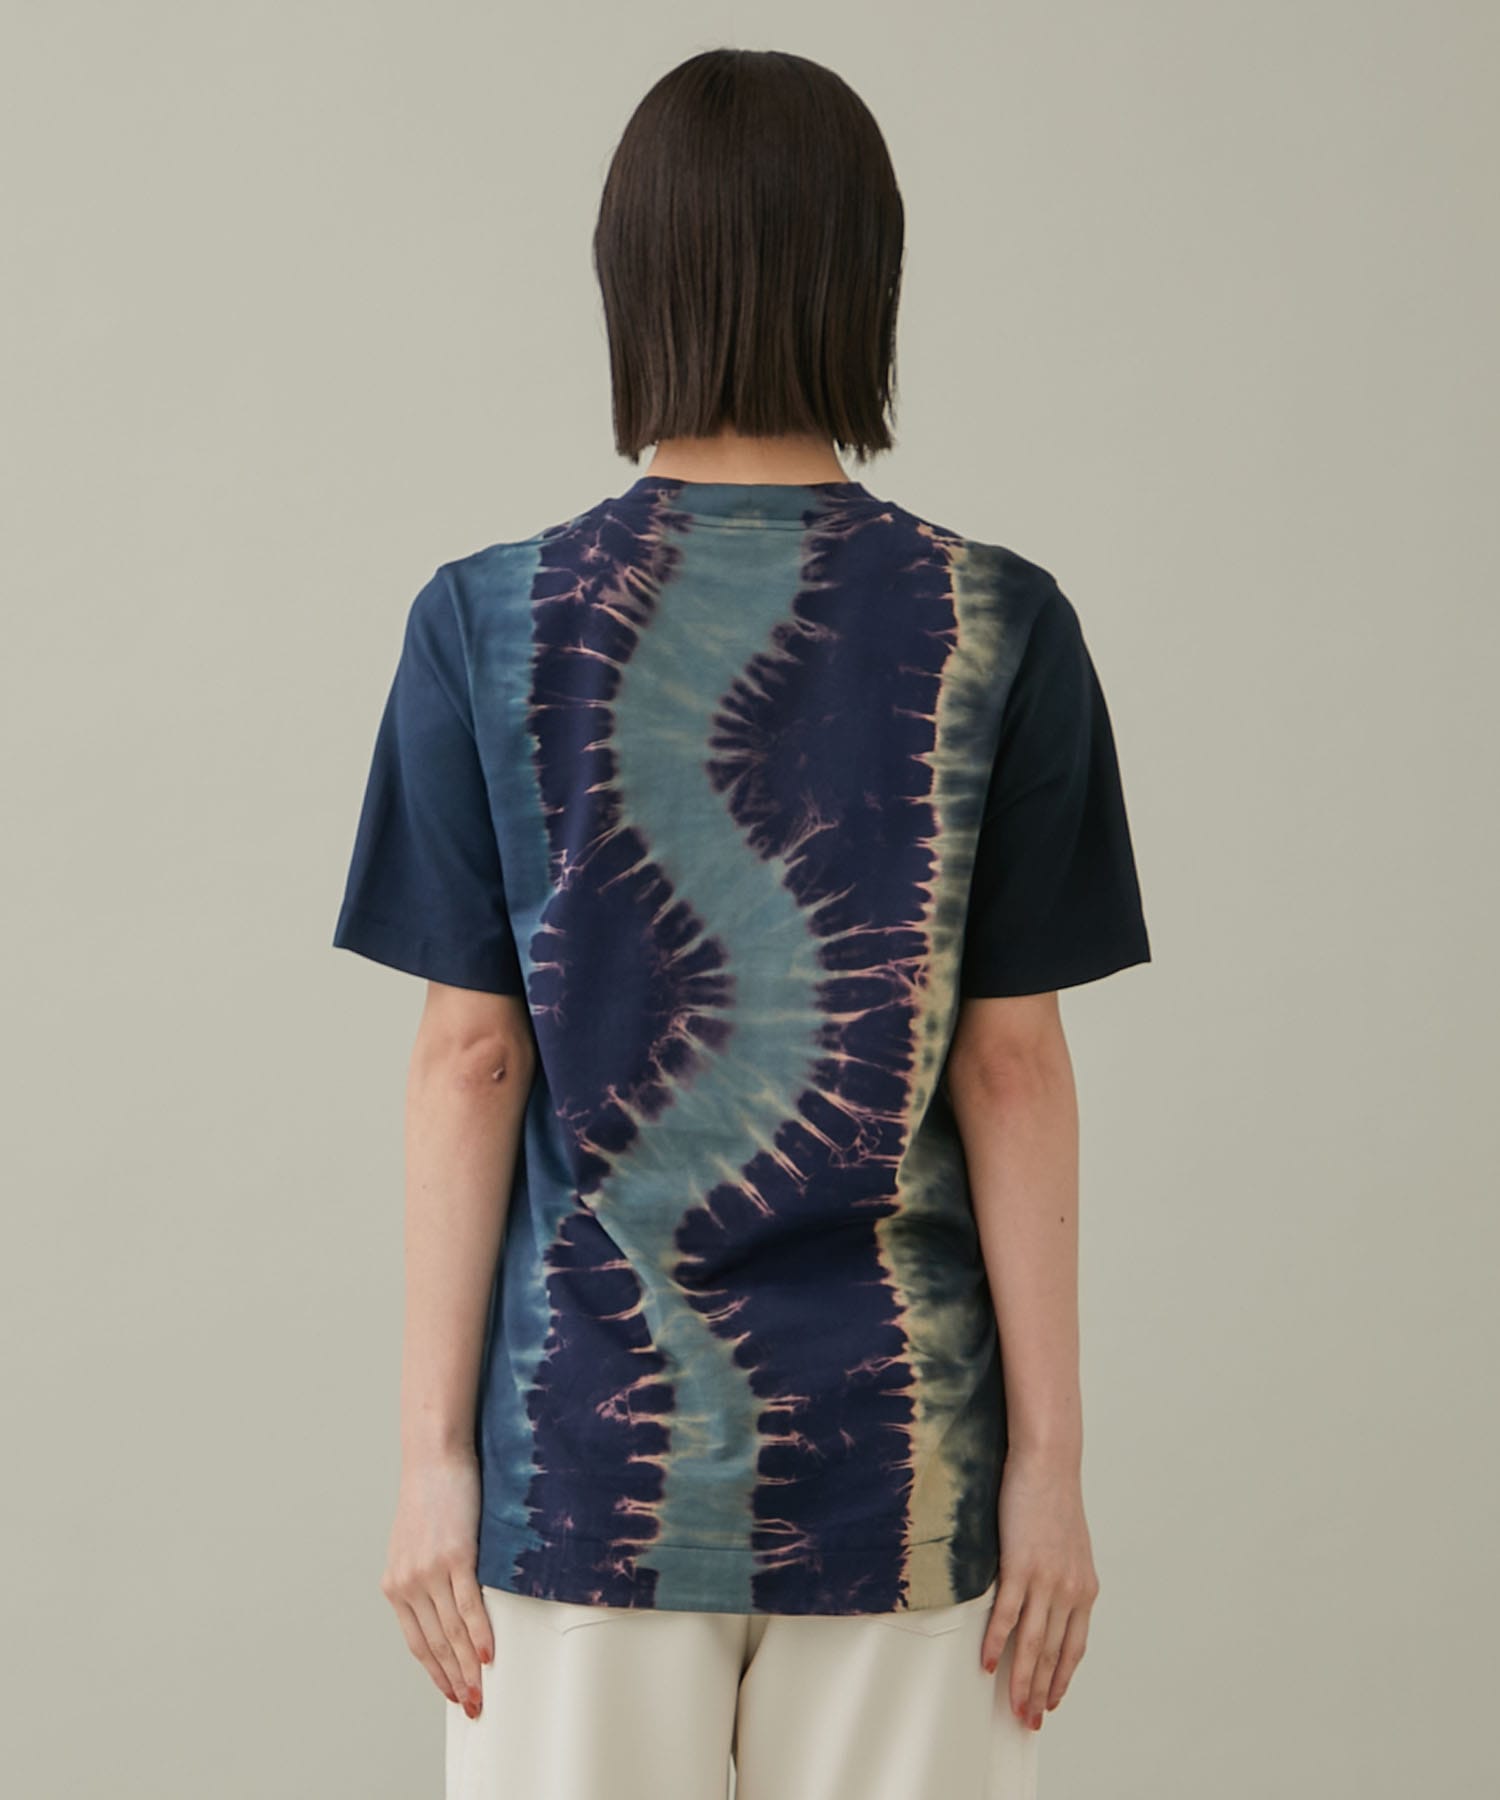 Shibori Tie-Dyed Cotton Jersey T-Shirt(2 NAVY): Mame Kurogouchi